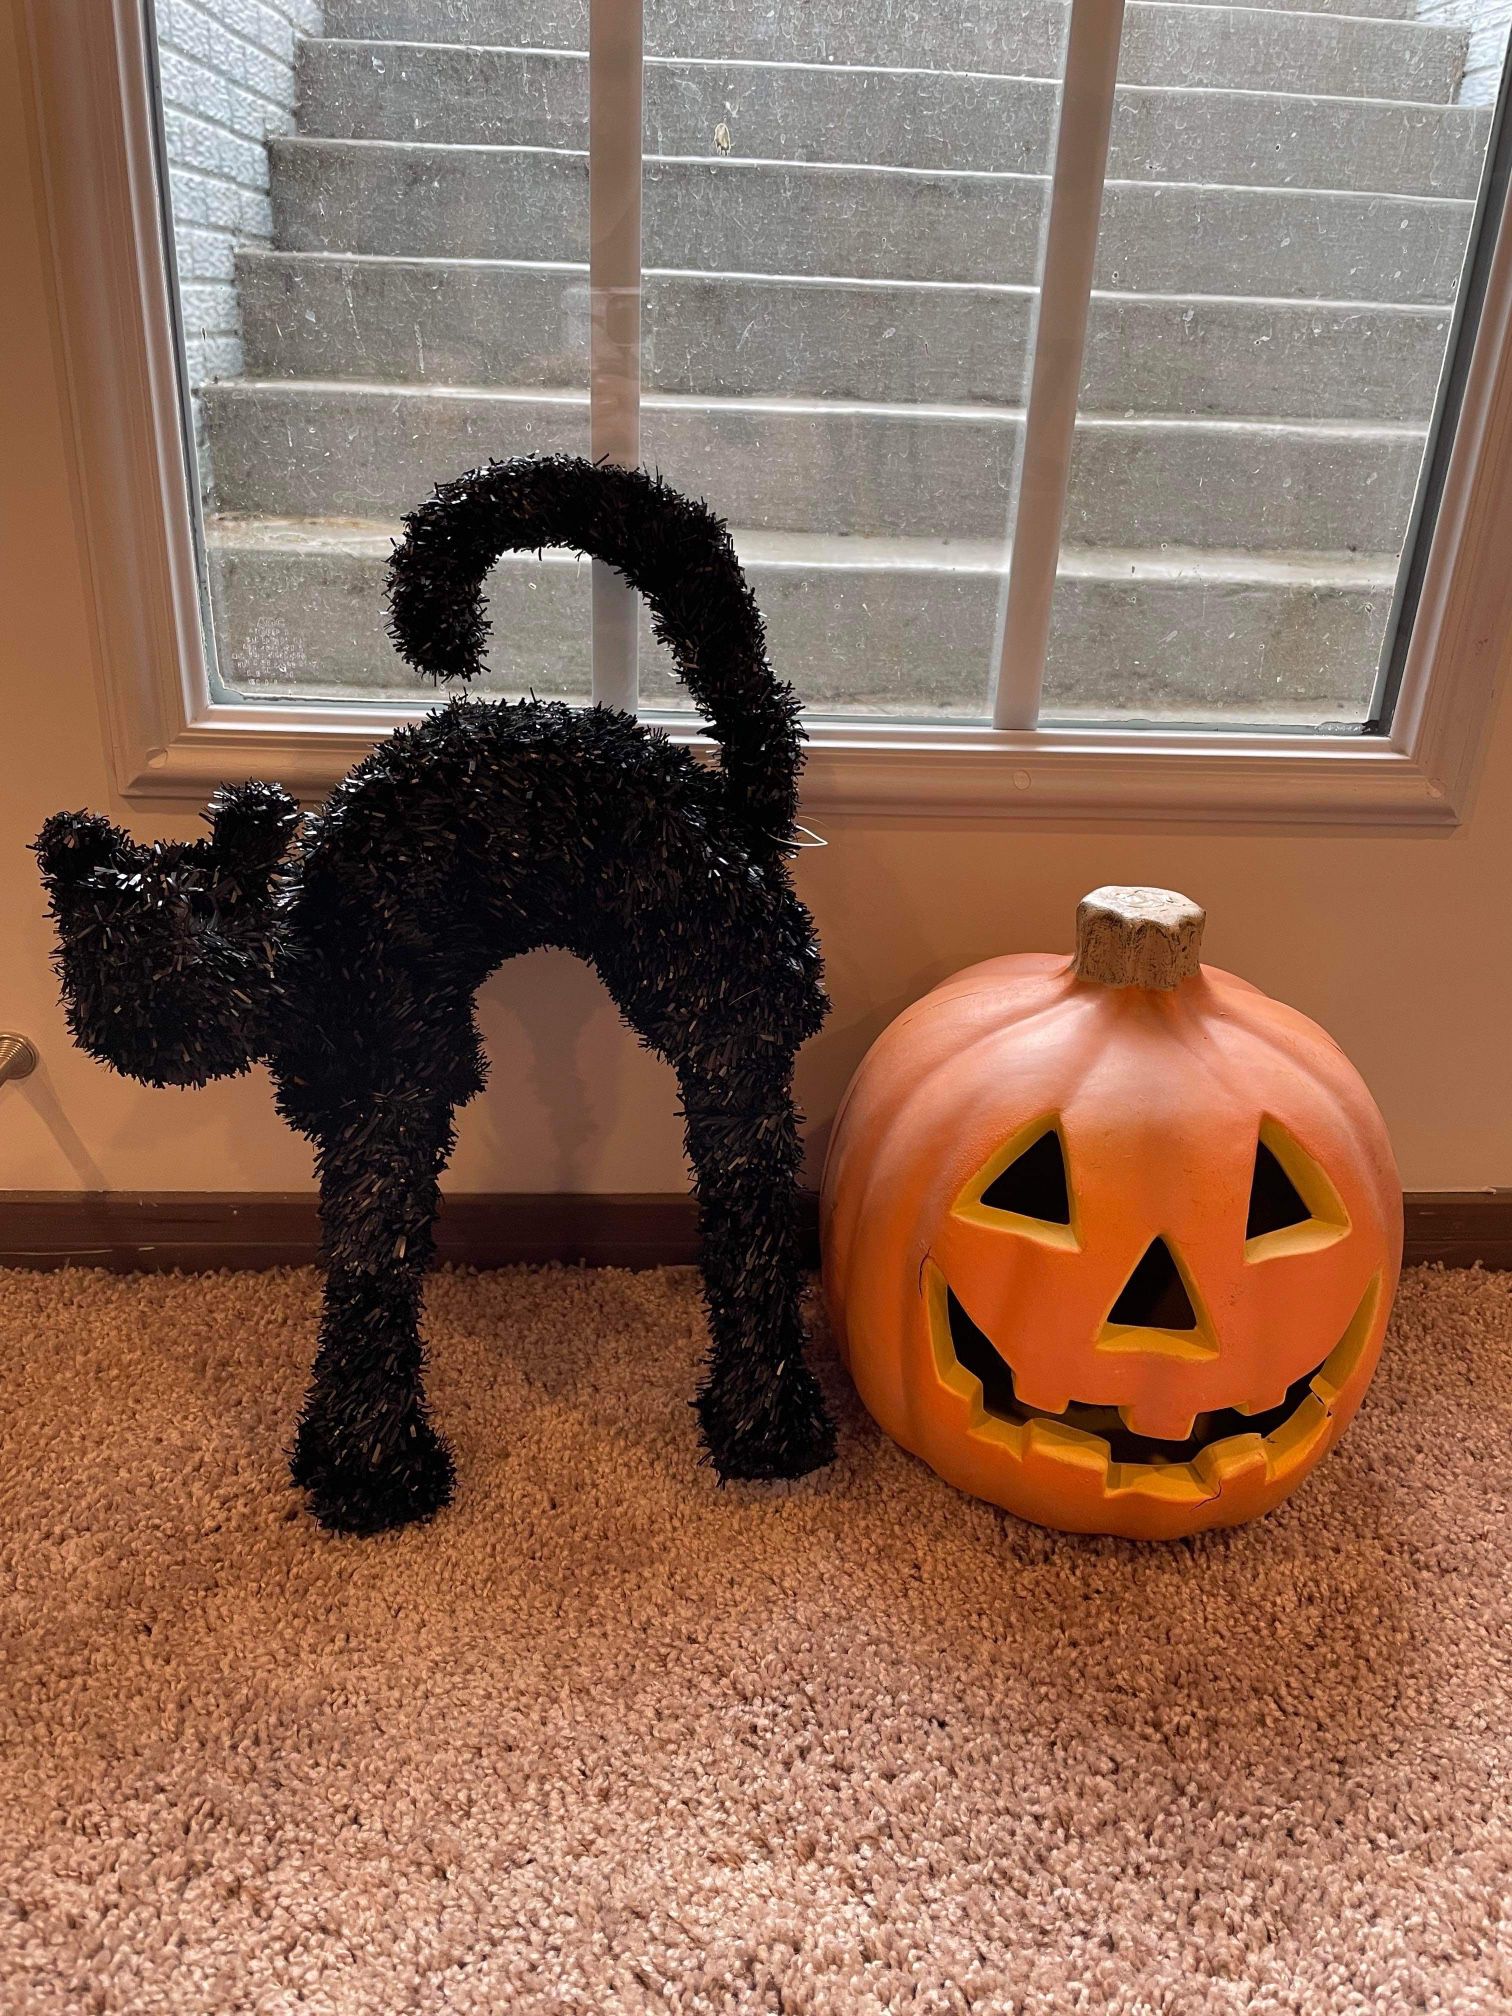 Halloween decorations - black cat and pumpkin